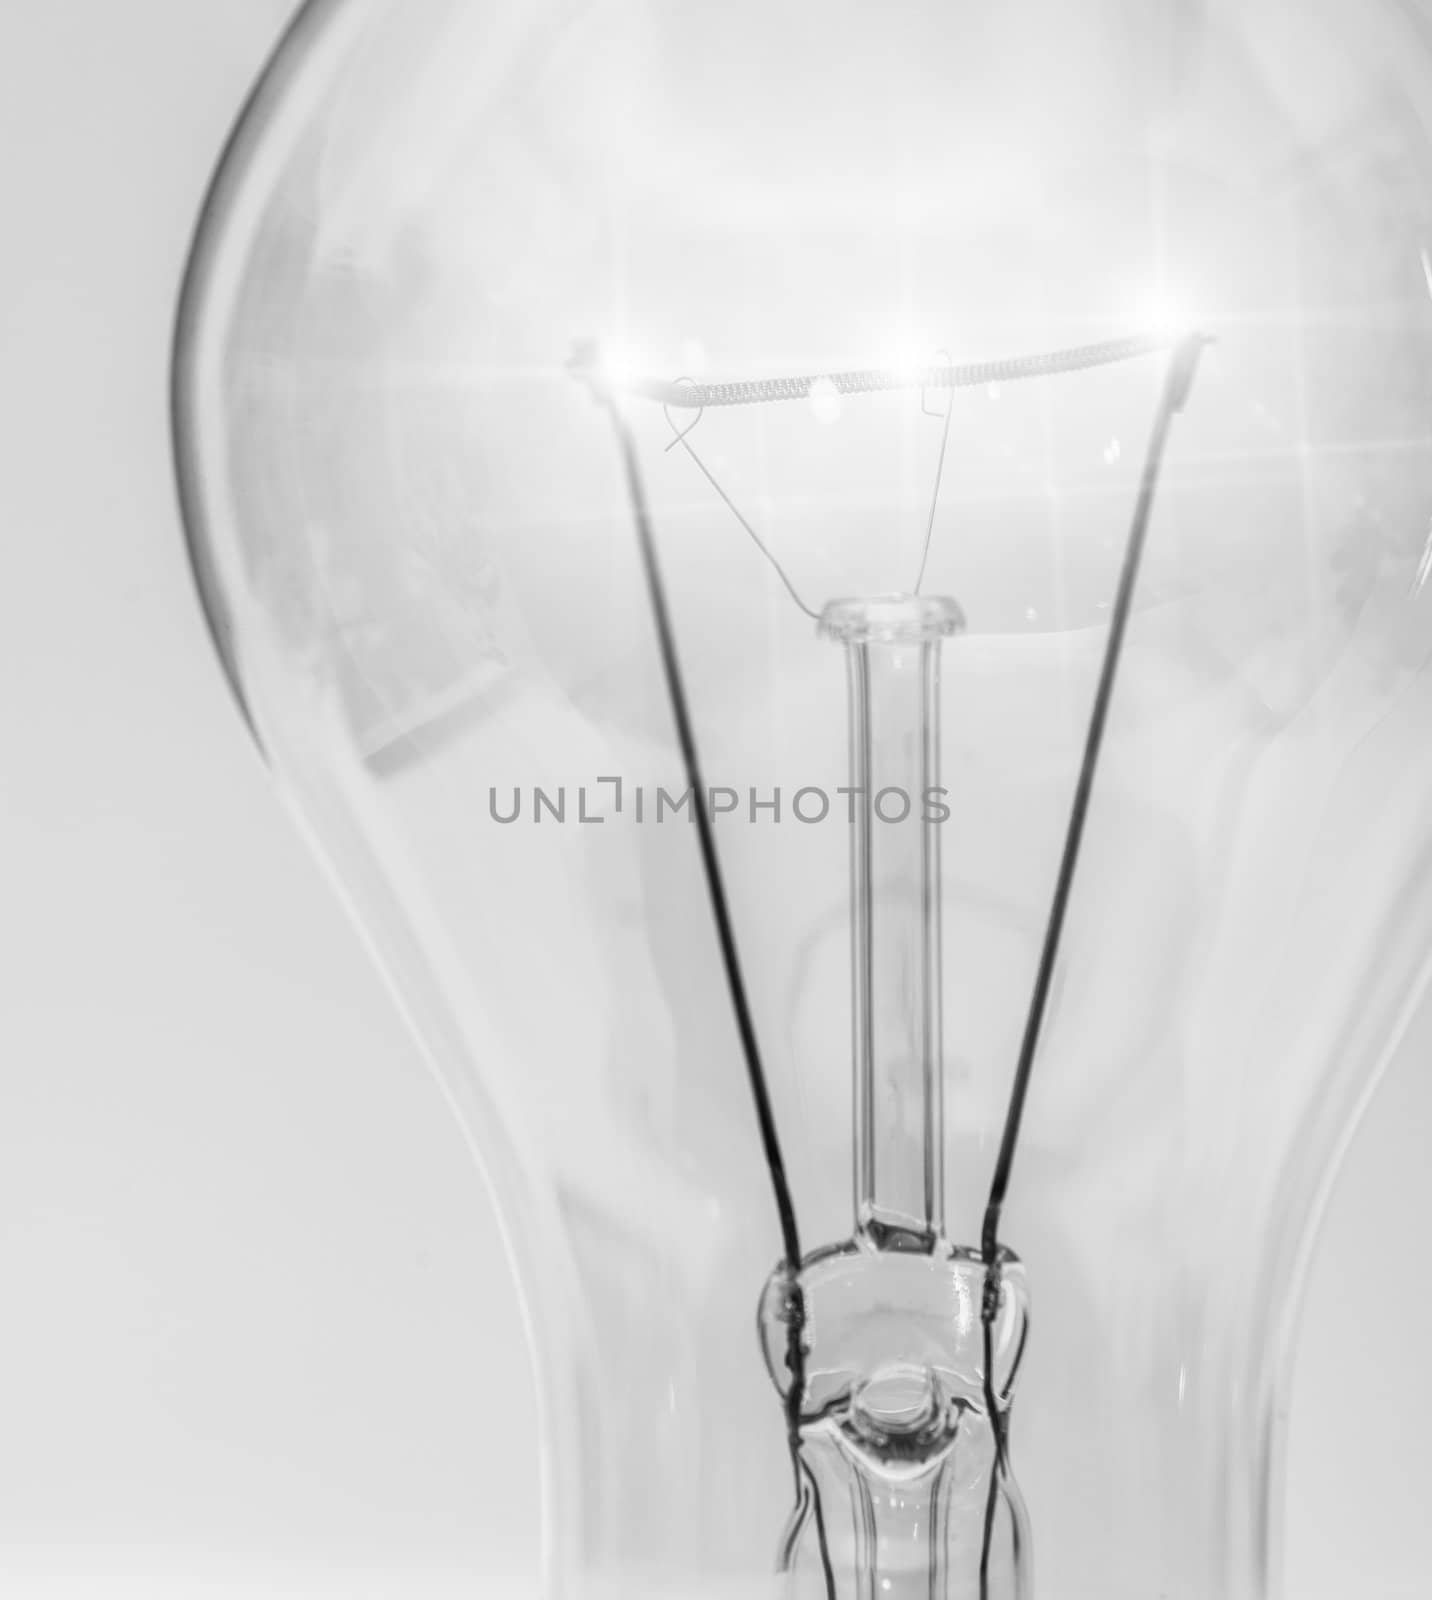 A light bulb close up